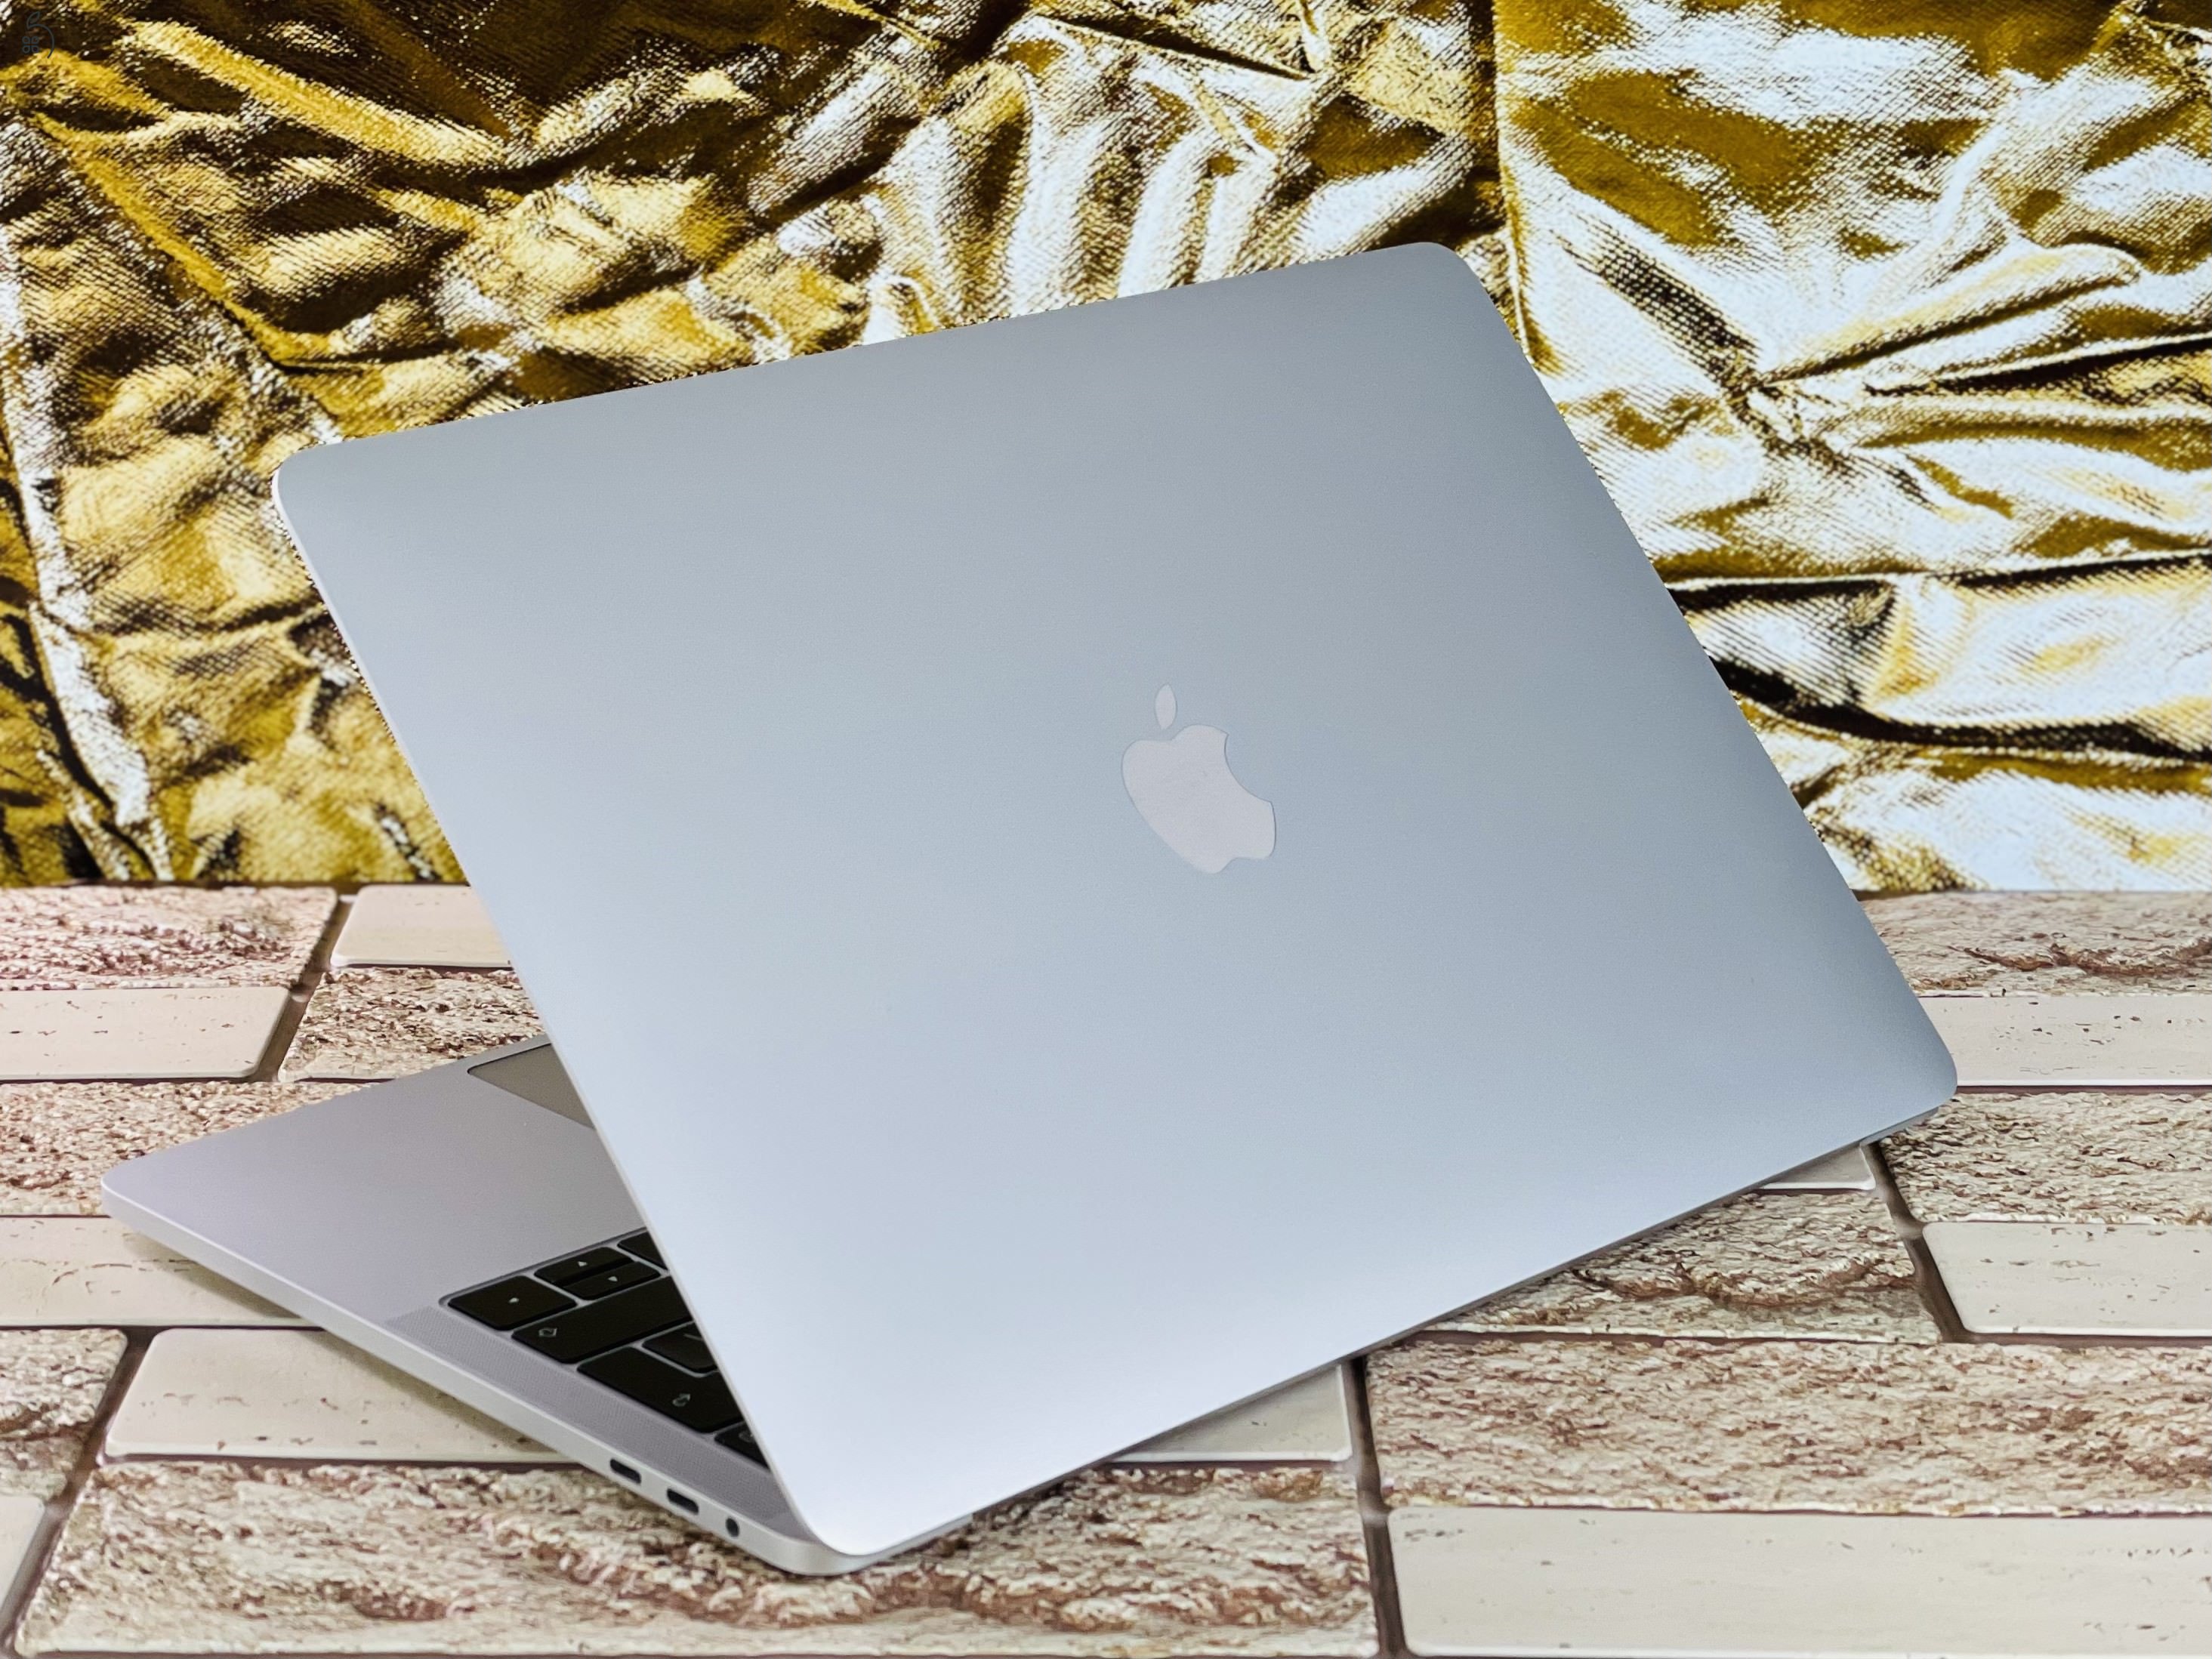 Eladó Apple Macbook PRO 512 GB 2019 13 i5 8 GB SSD TOUCH BAR - 12 HÓ GARI - S1439